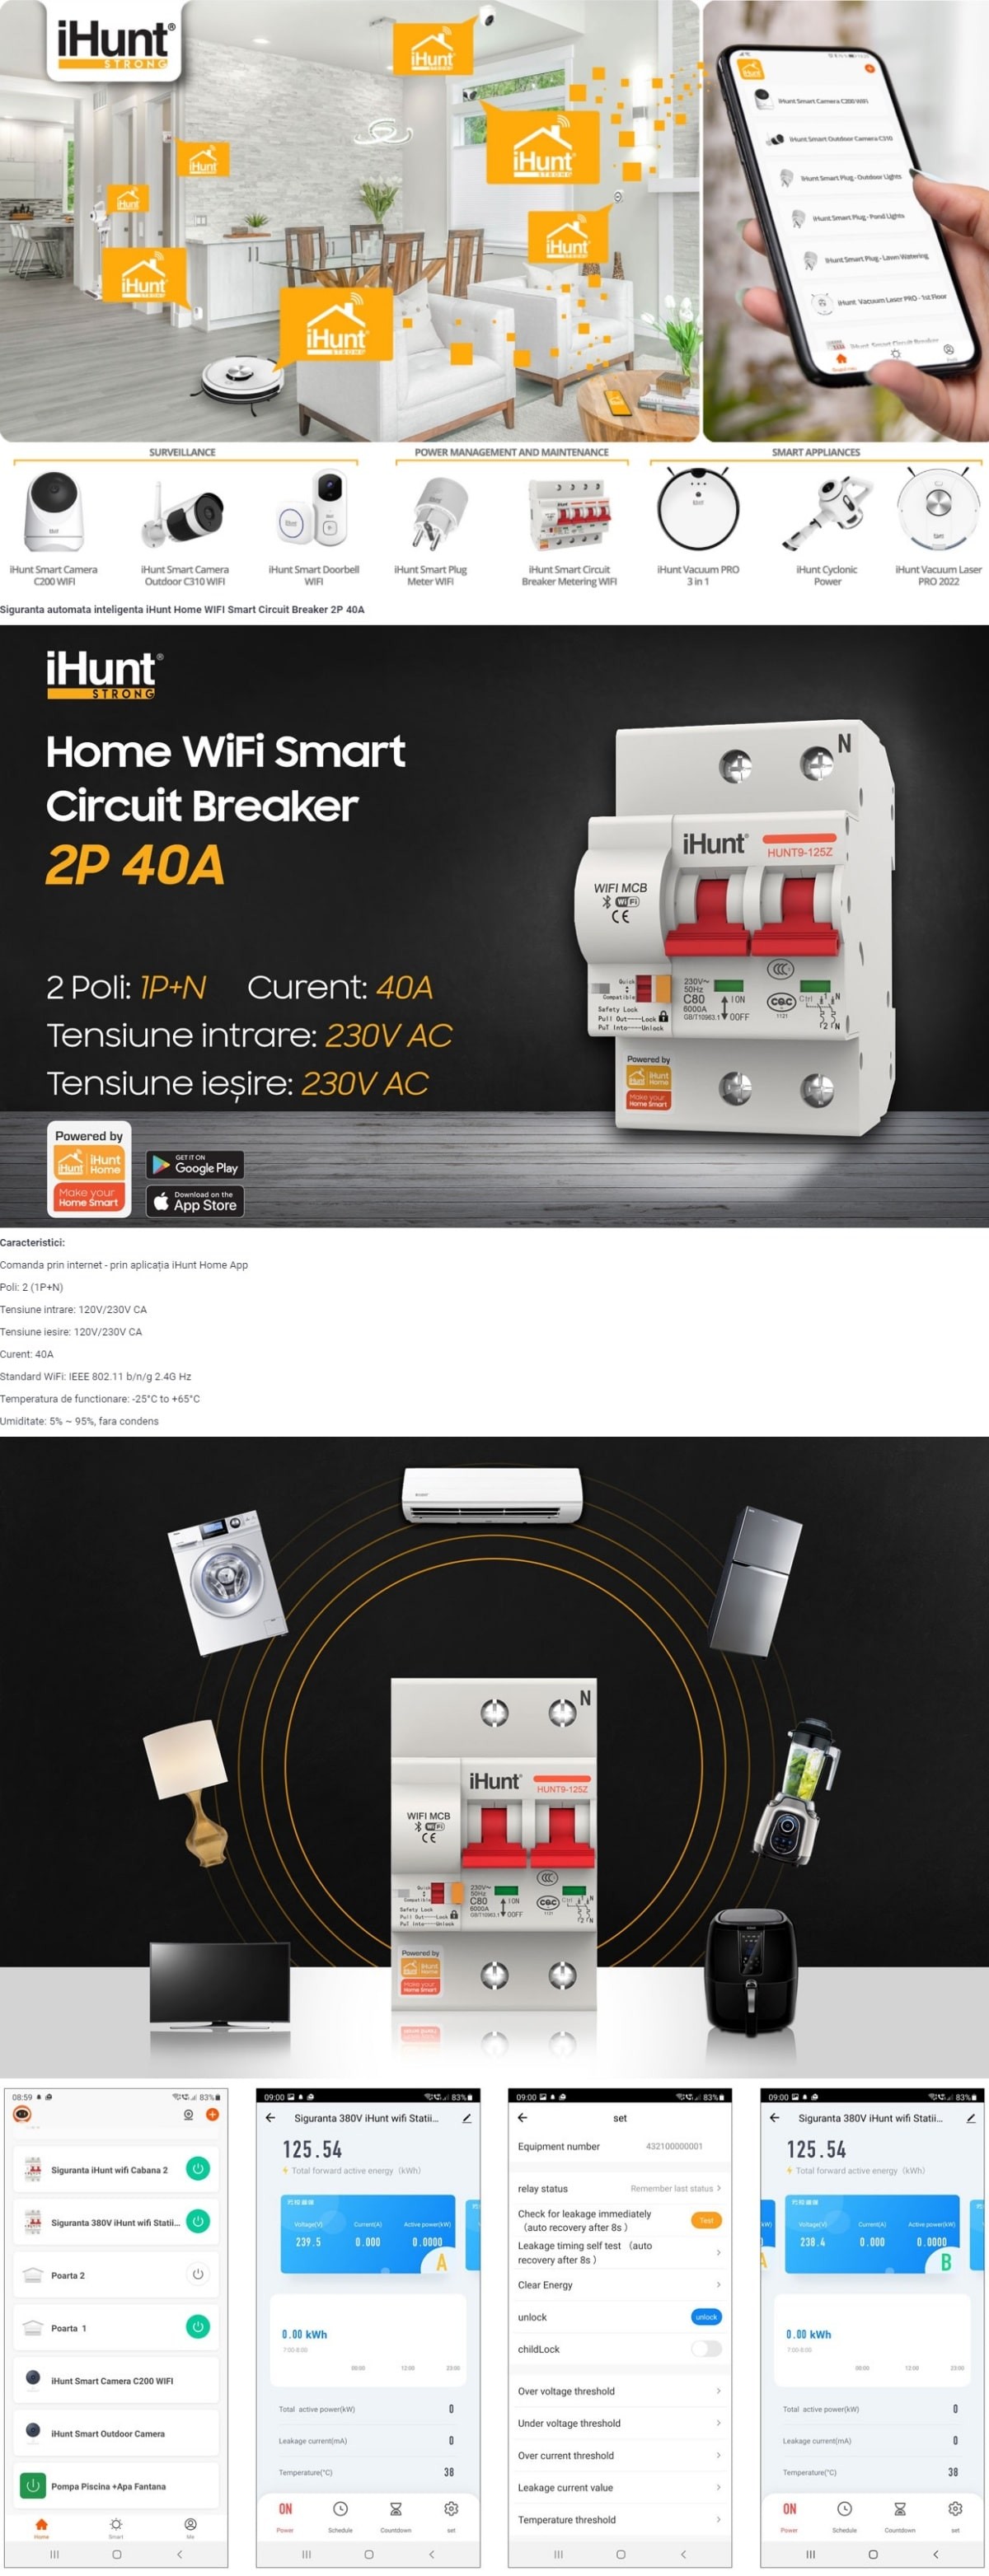 iHunt-Home-WIFI-Smart-Circuit-Breaker-2P-40Ae8be2b47c4ca9afc.jpg